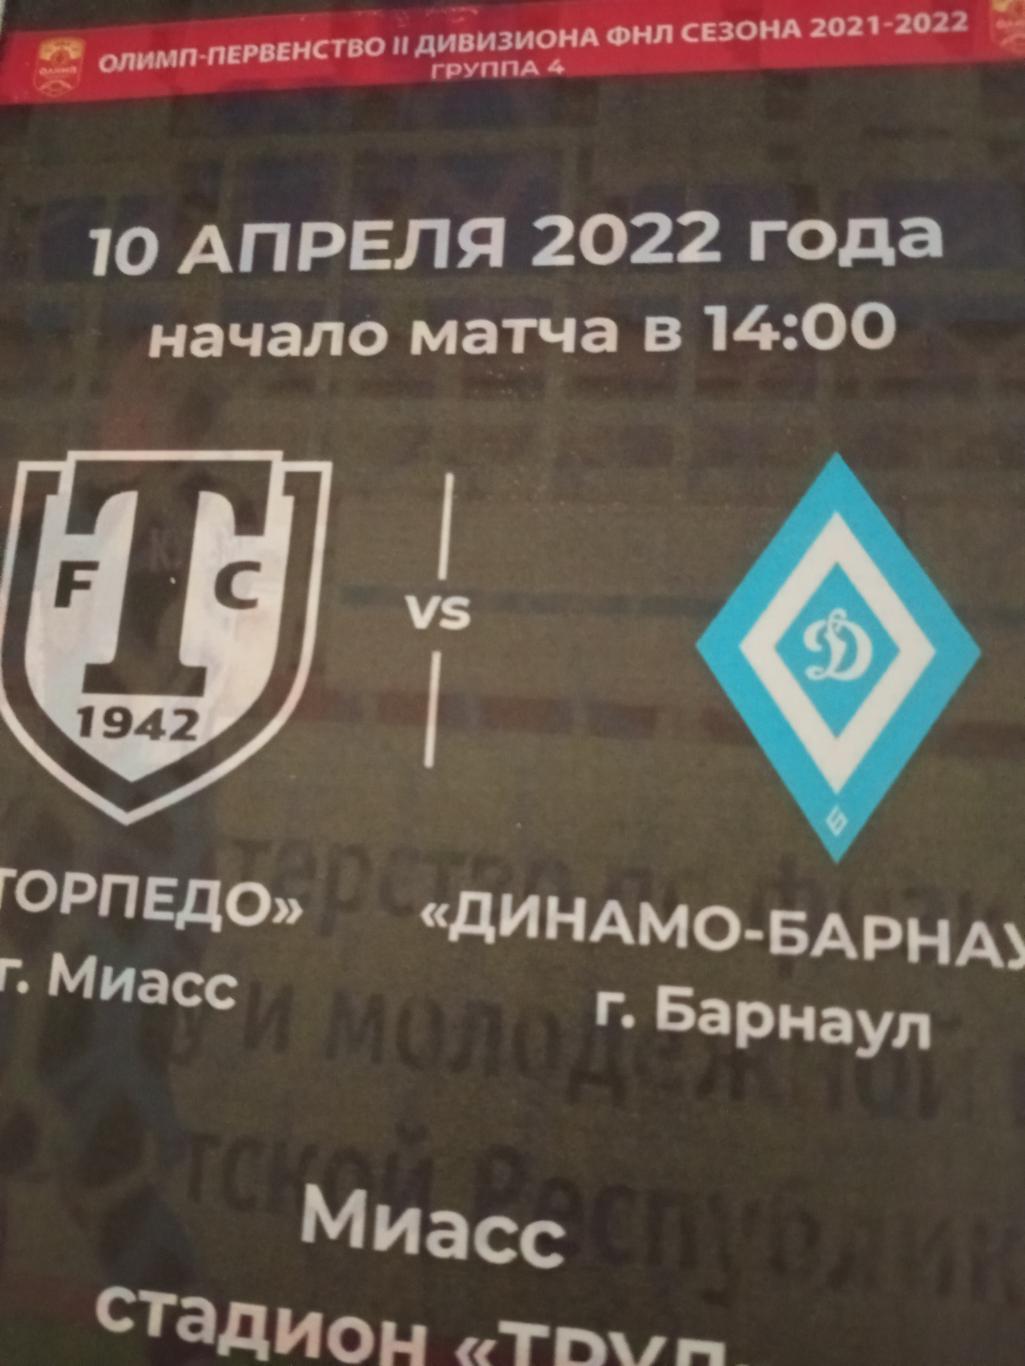 Торпедо Миасс - Динамо Барнаул. 10 апреля 2022 год